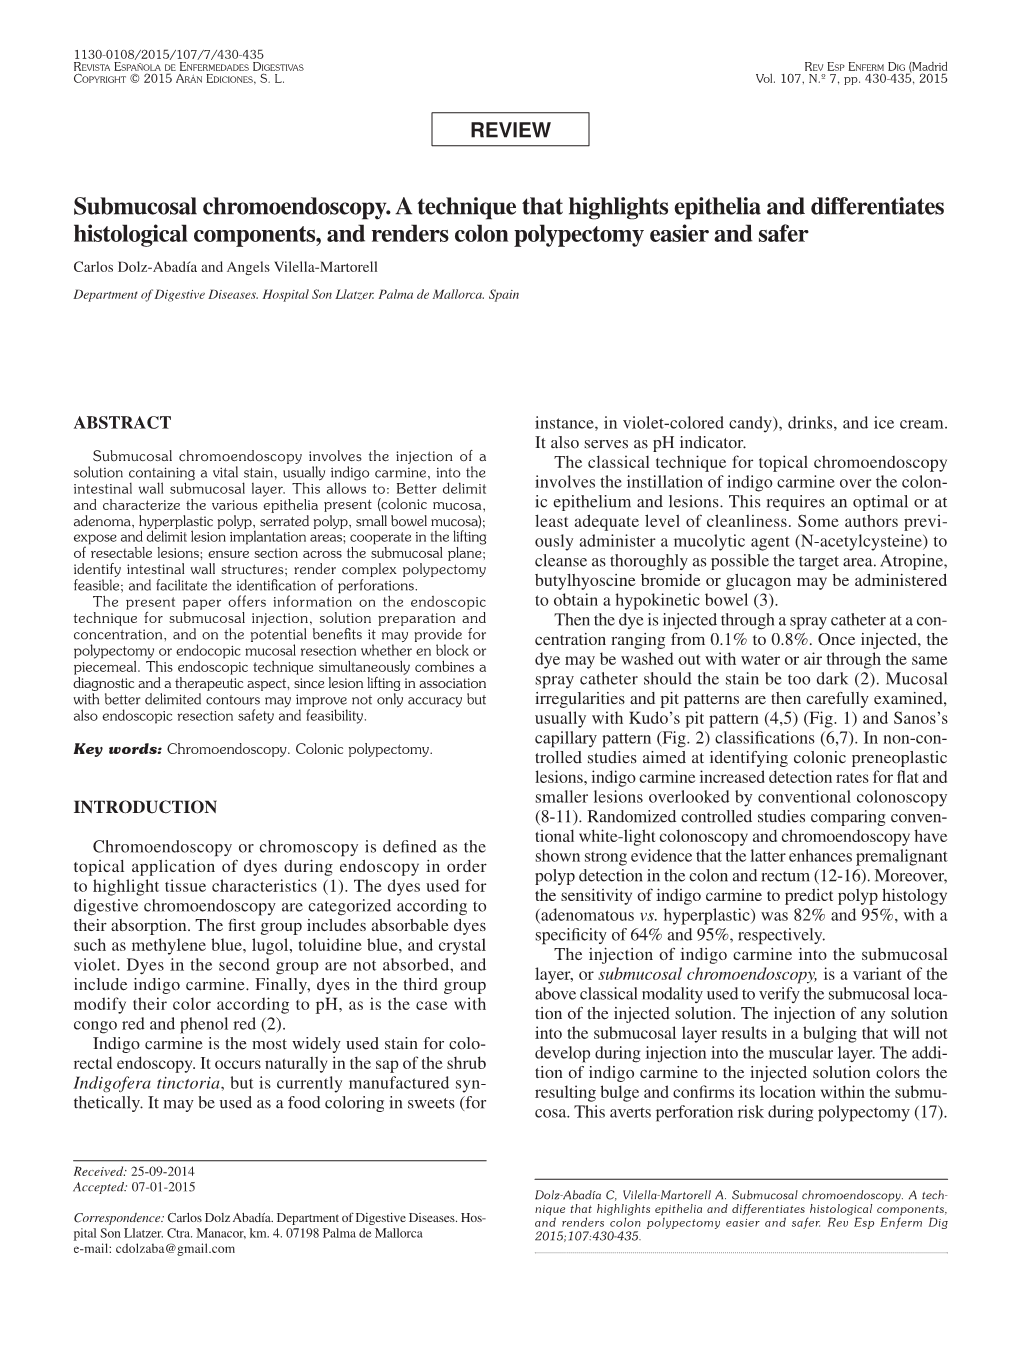 Submucosal Chromoendoscopy. a Technique That Highlights Epithelia